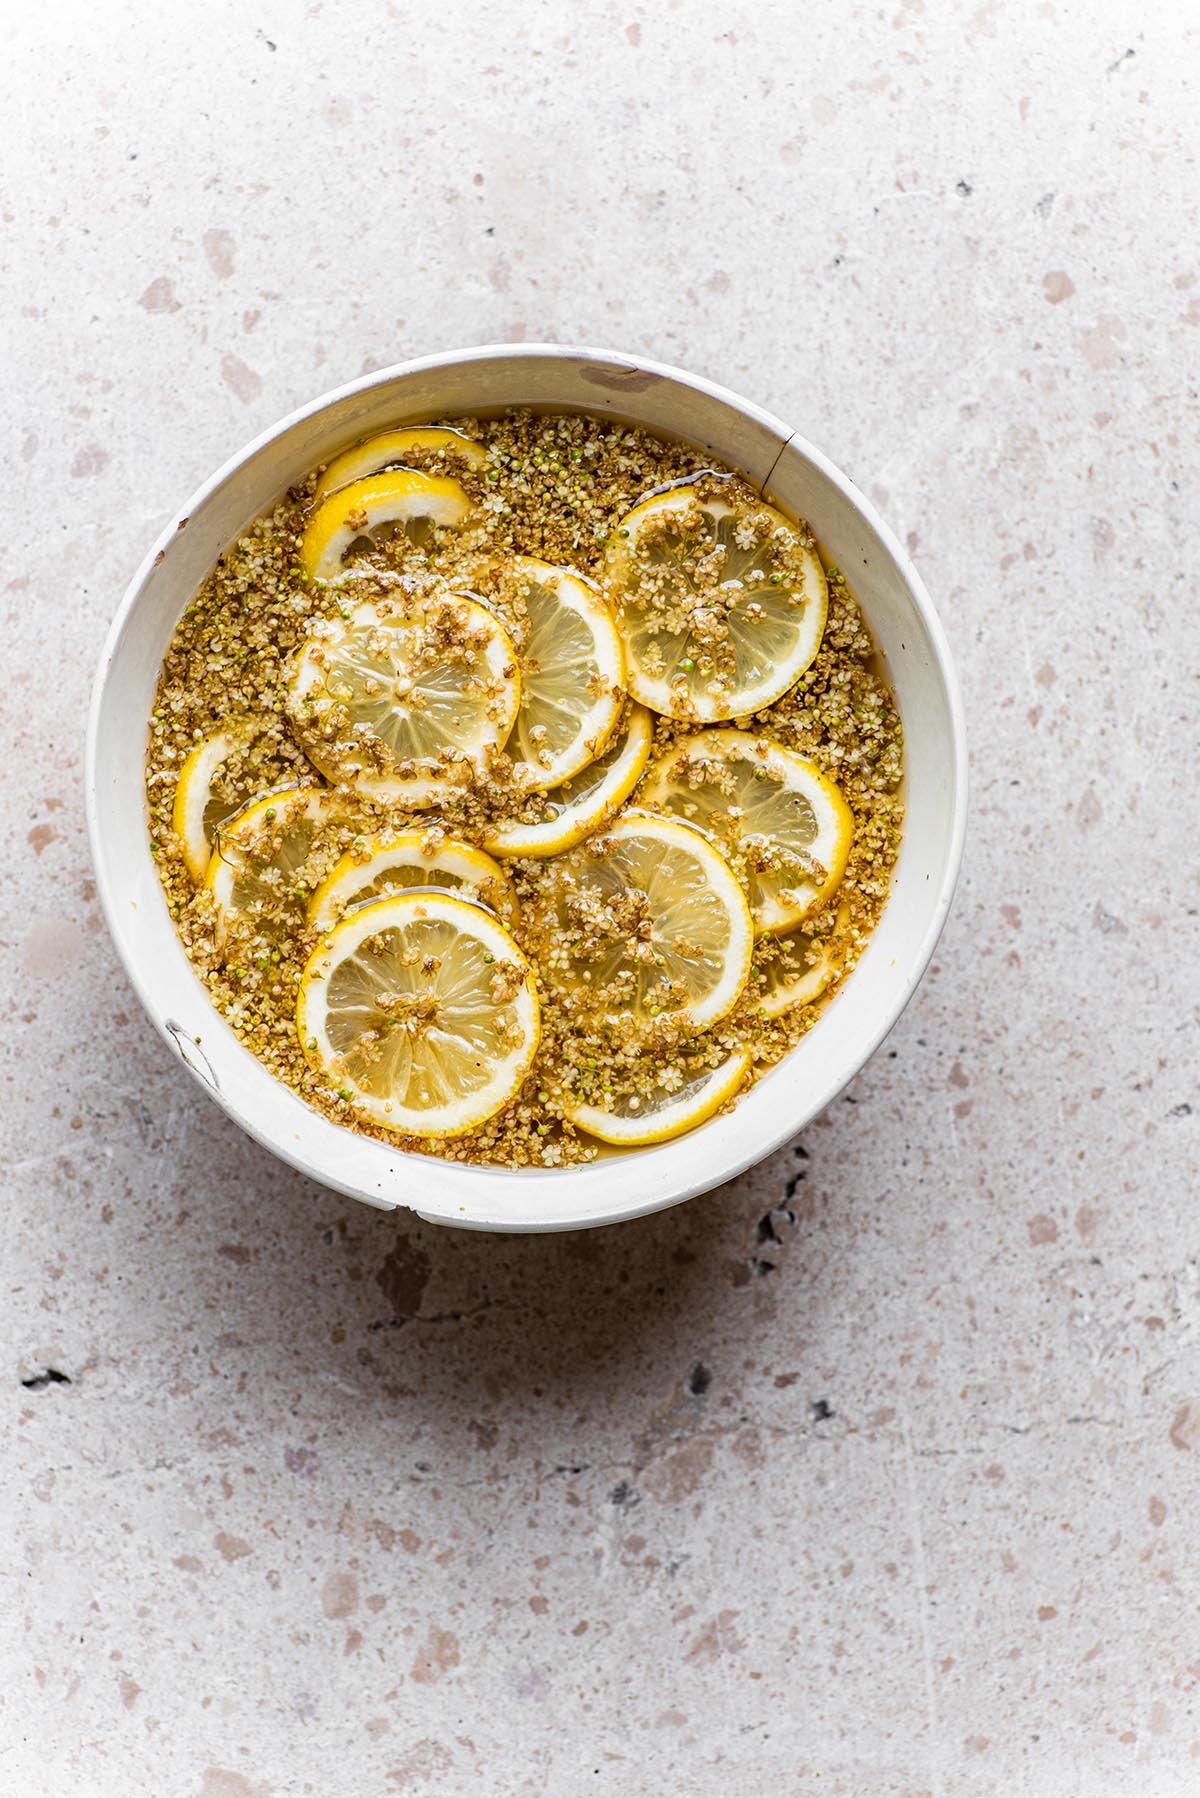 Lemon slices with elderflowers floating in a bowl.